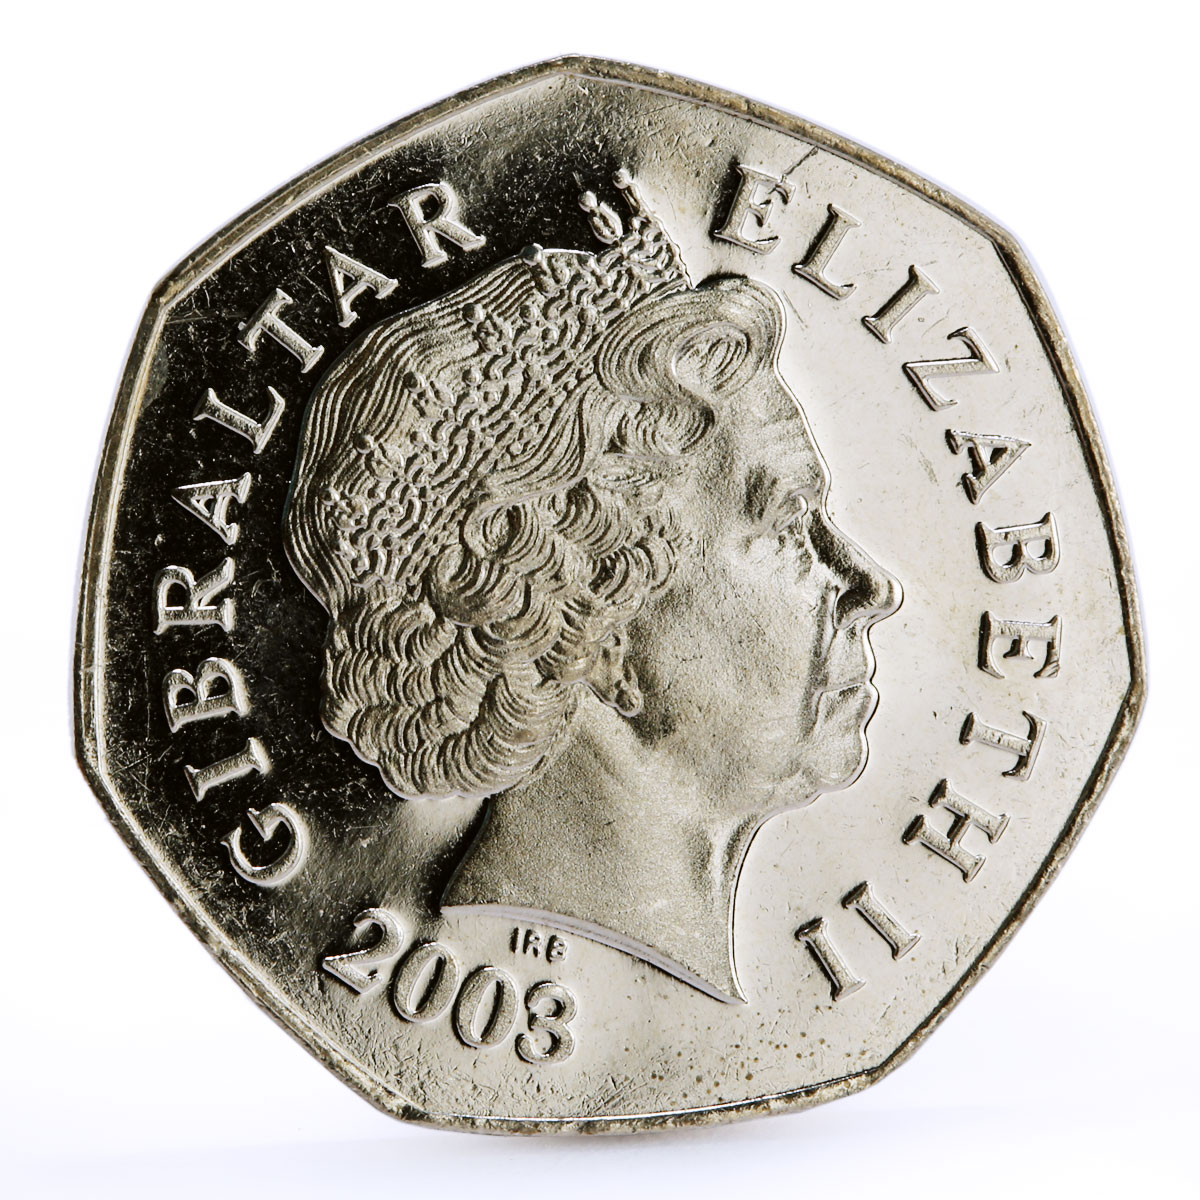 Gibraltar 50 pence Holidays Saints Christmas Jesus Christ CuNi coin 2003